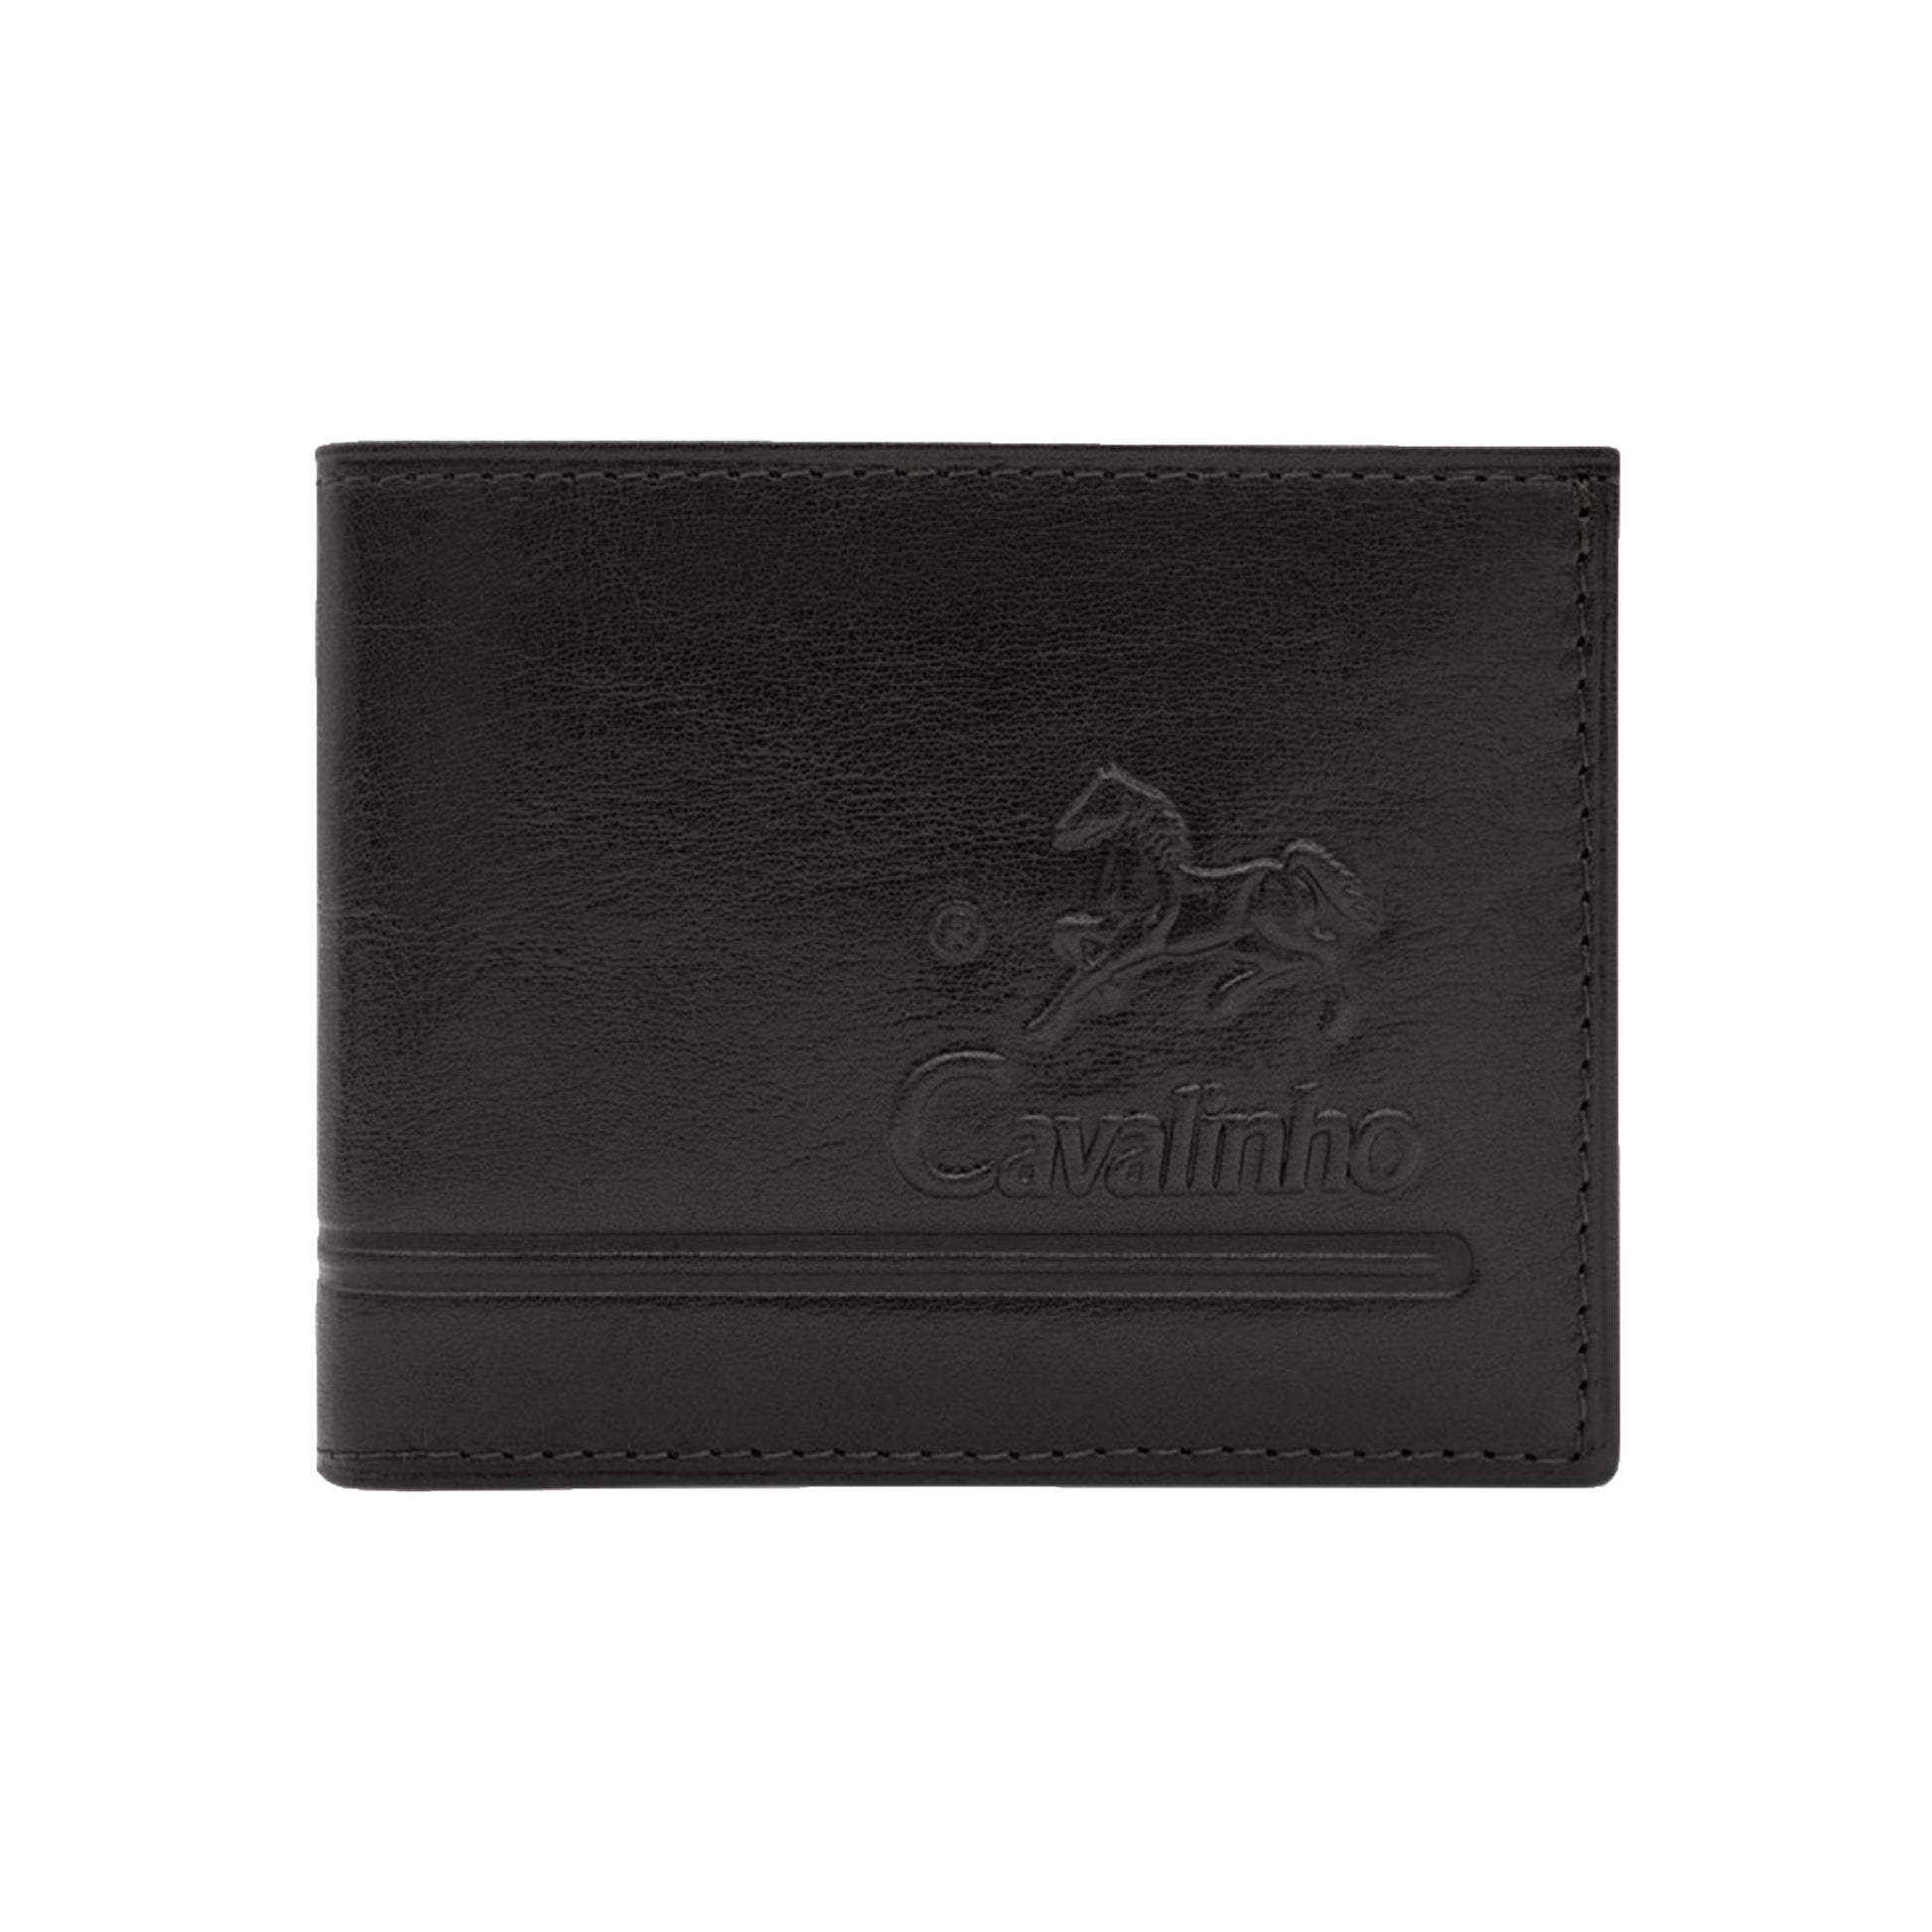 Cavalinho Men's Trifold Leather Wallet - Black - 28610523.01.99_1